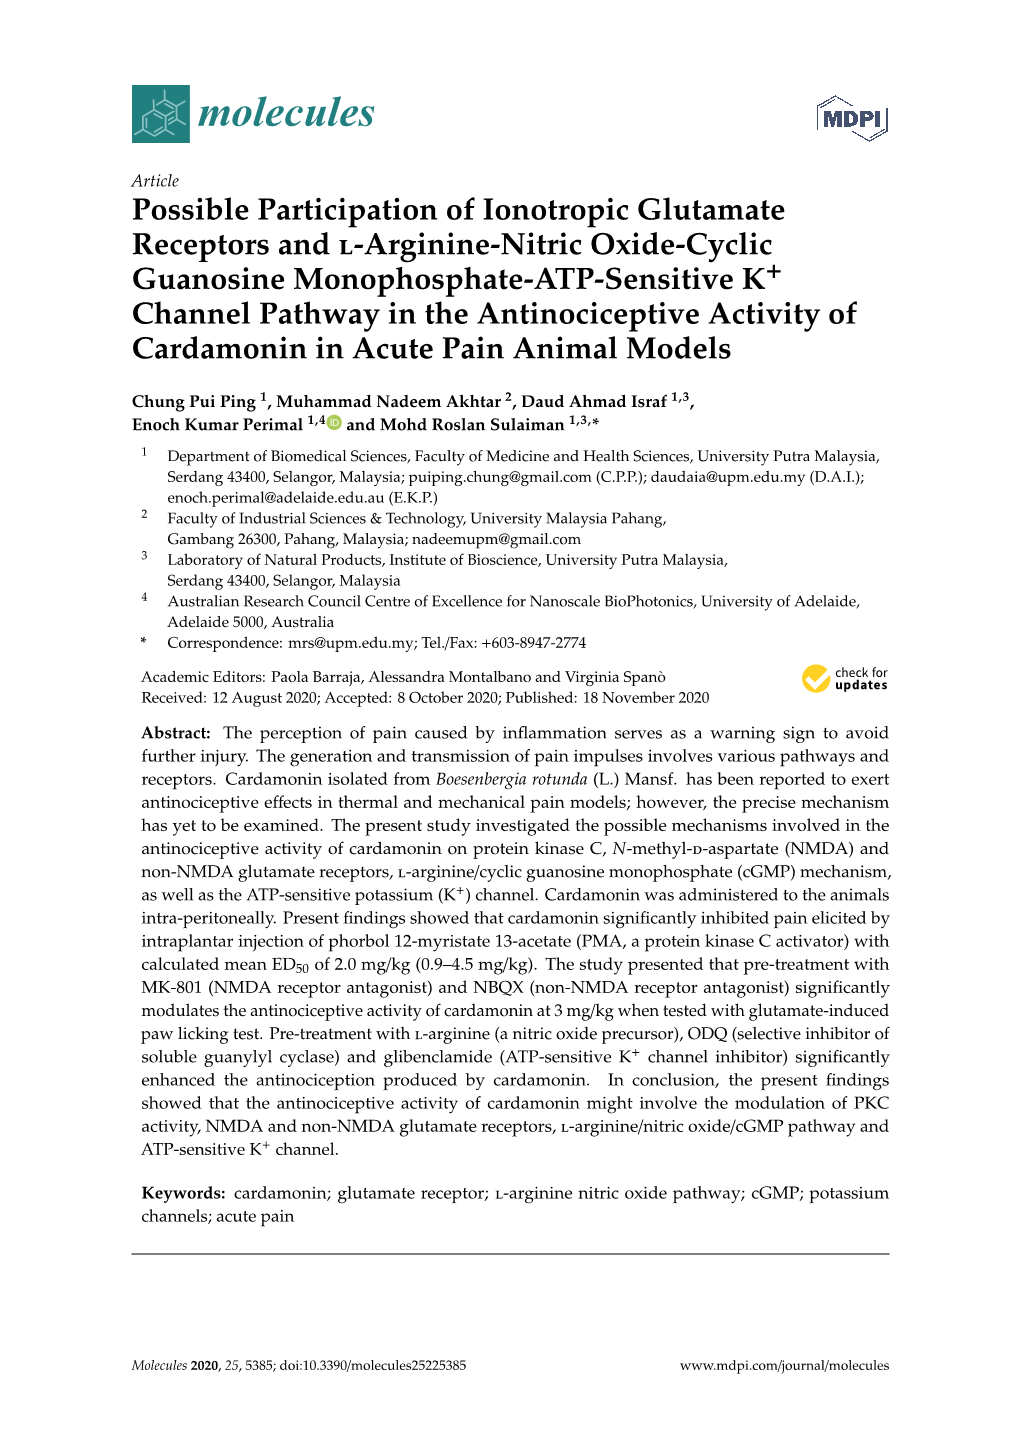 Possible Participation of Ionotropic Glutamate Receptors and L-Arginine-Nitric Oxide-Cyclic Guanosine Monophosphate-ATP-Sensitiv